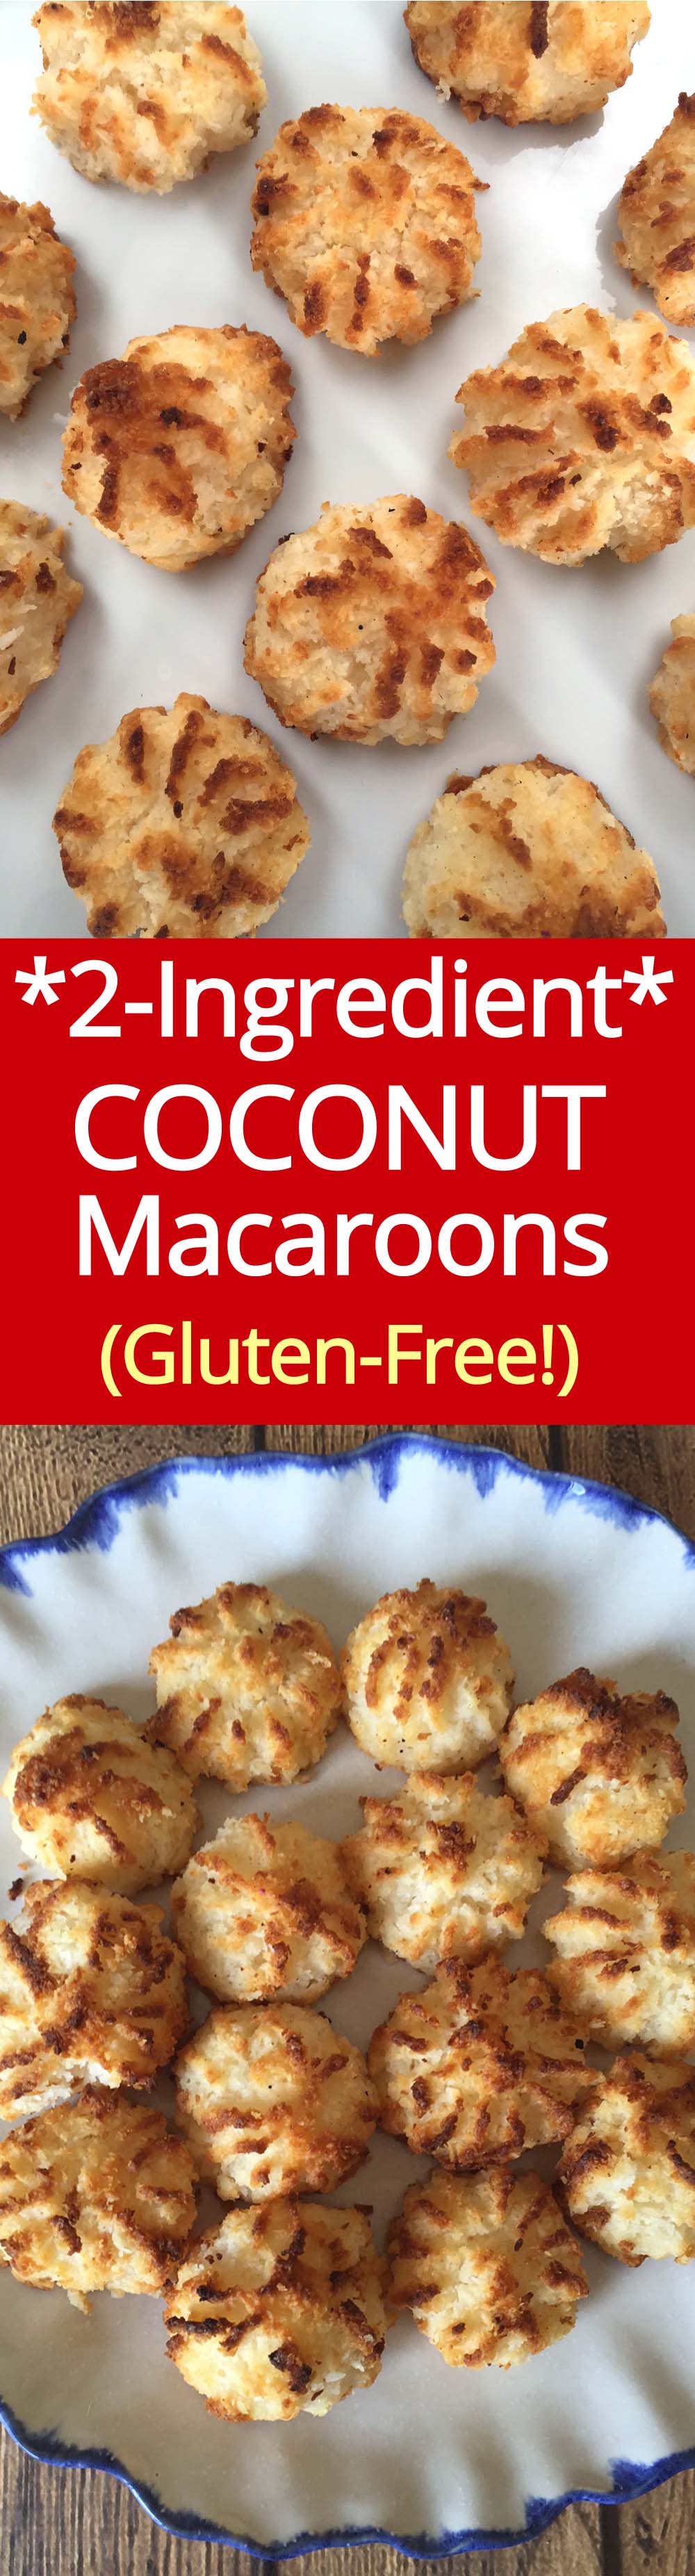 2-Ingredient Coconut Macaroons - amazing gluten-free cookies from MelanieCooks.com! #glutenfree #coconut #macaroons